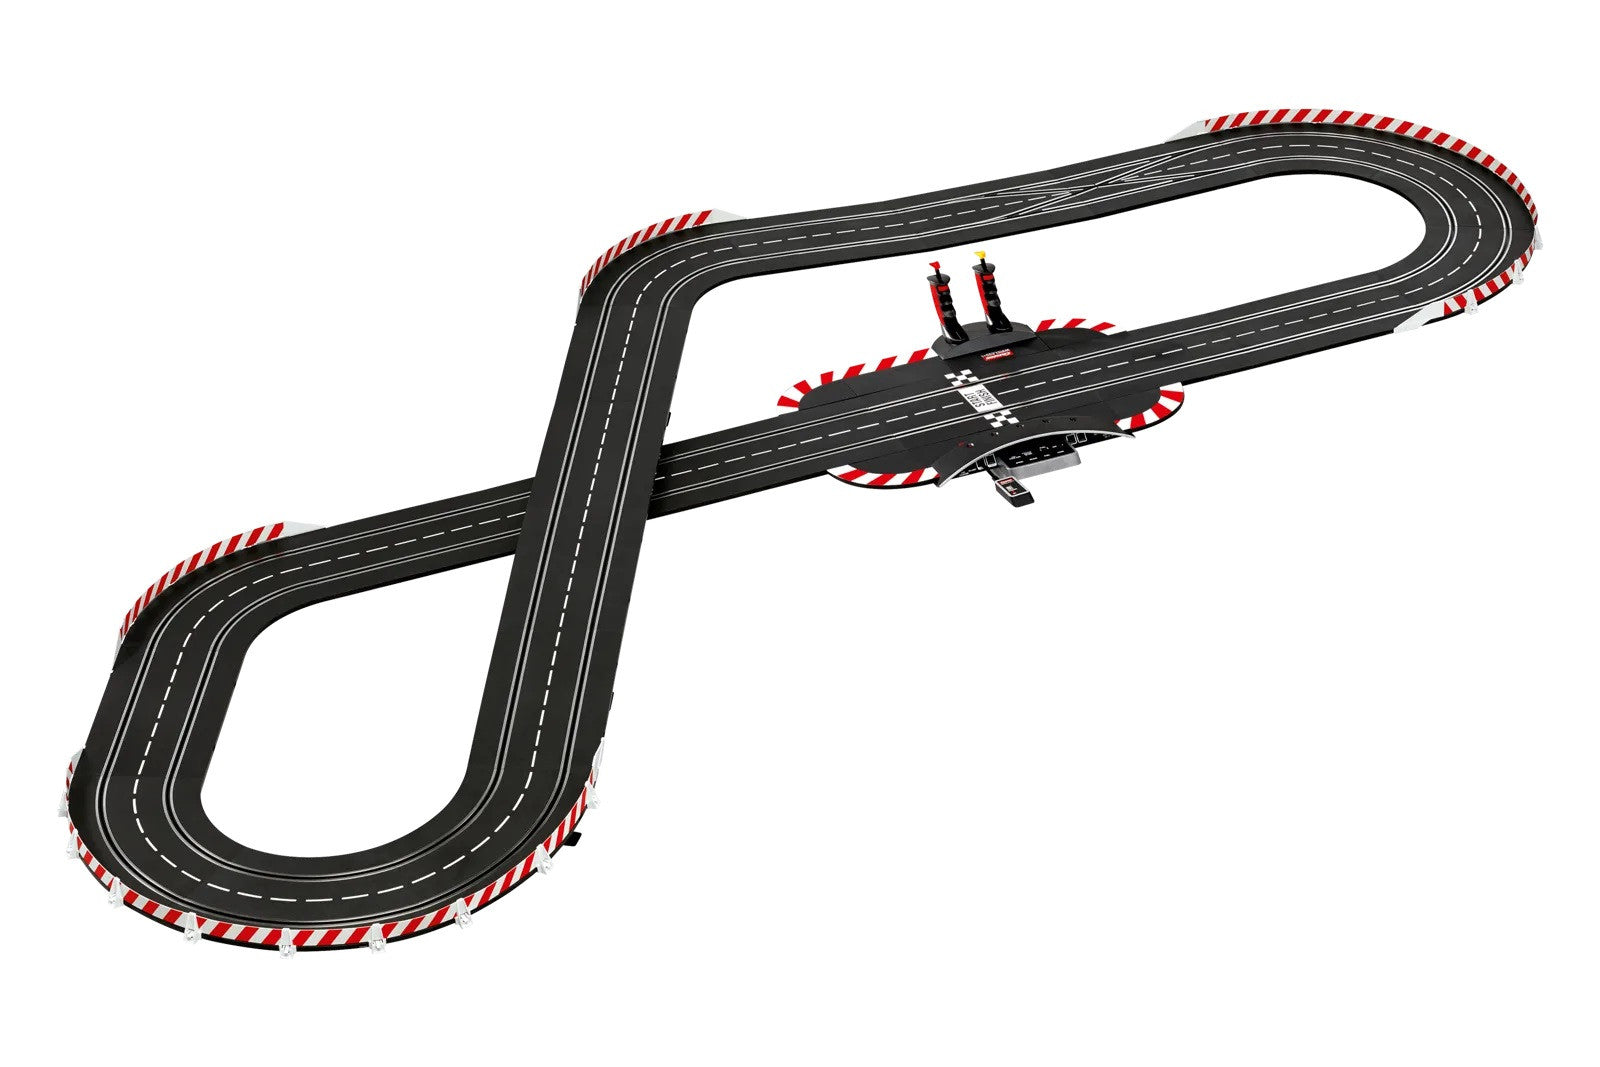 Carrera Digital 132 Circuit Retro Grand Prix 30031